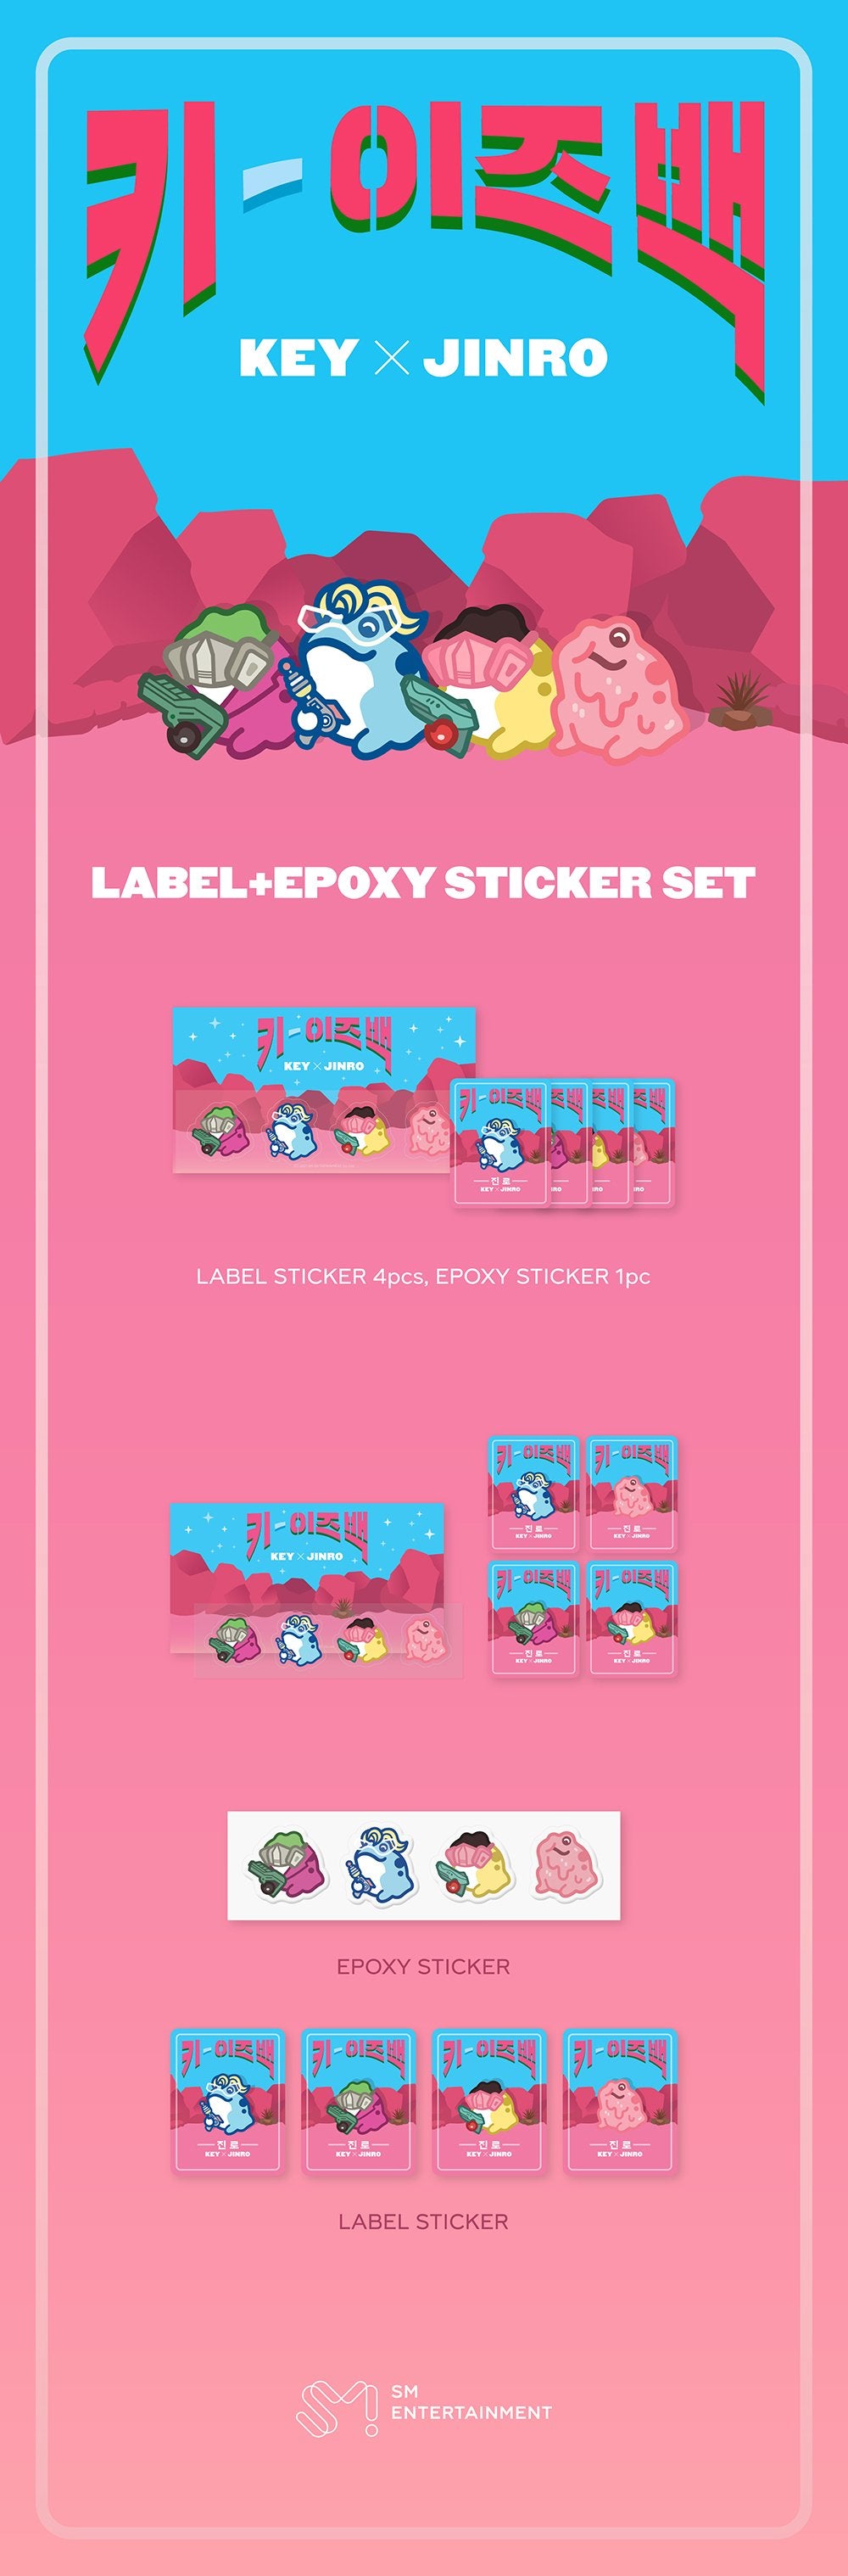 KEY x JINRO Label + Epoxy Sticker Set